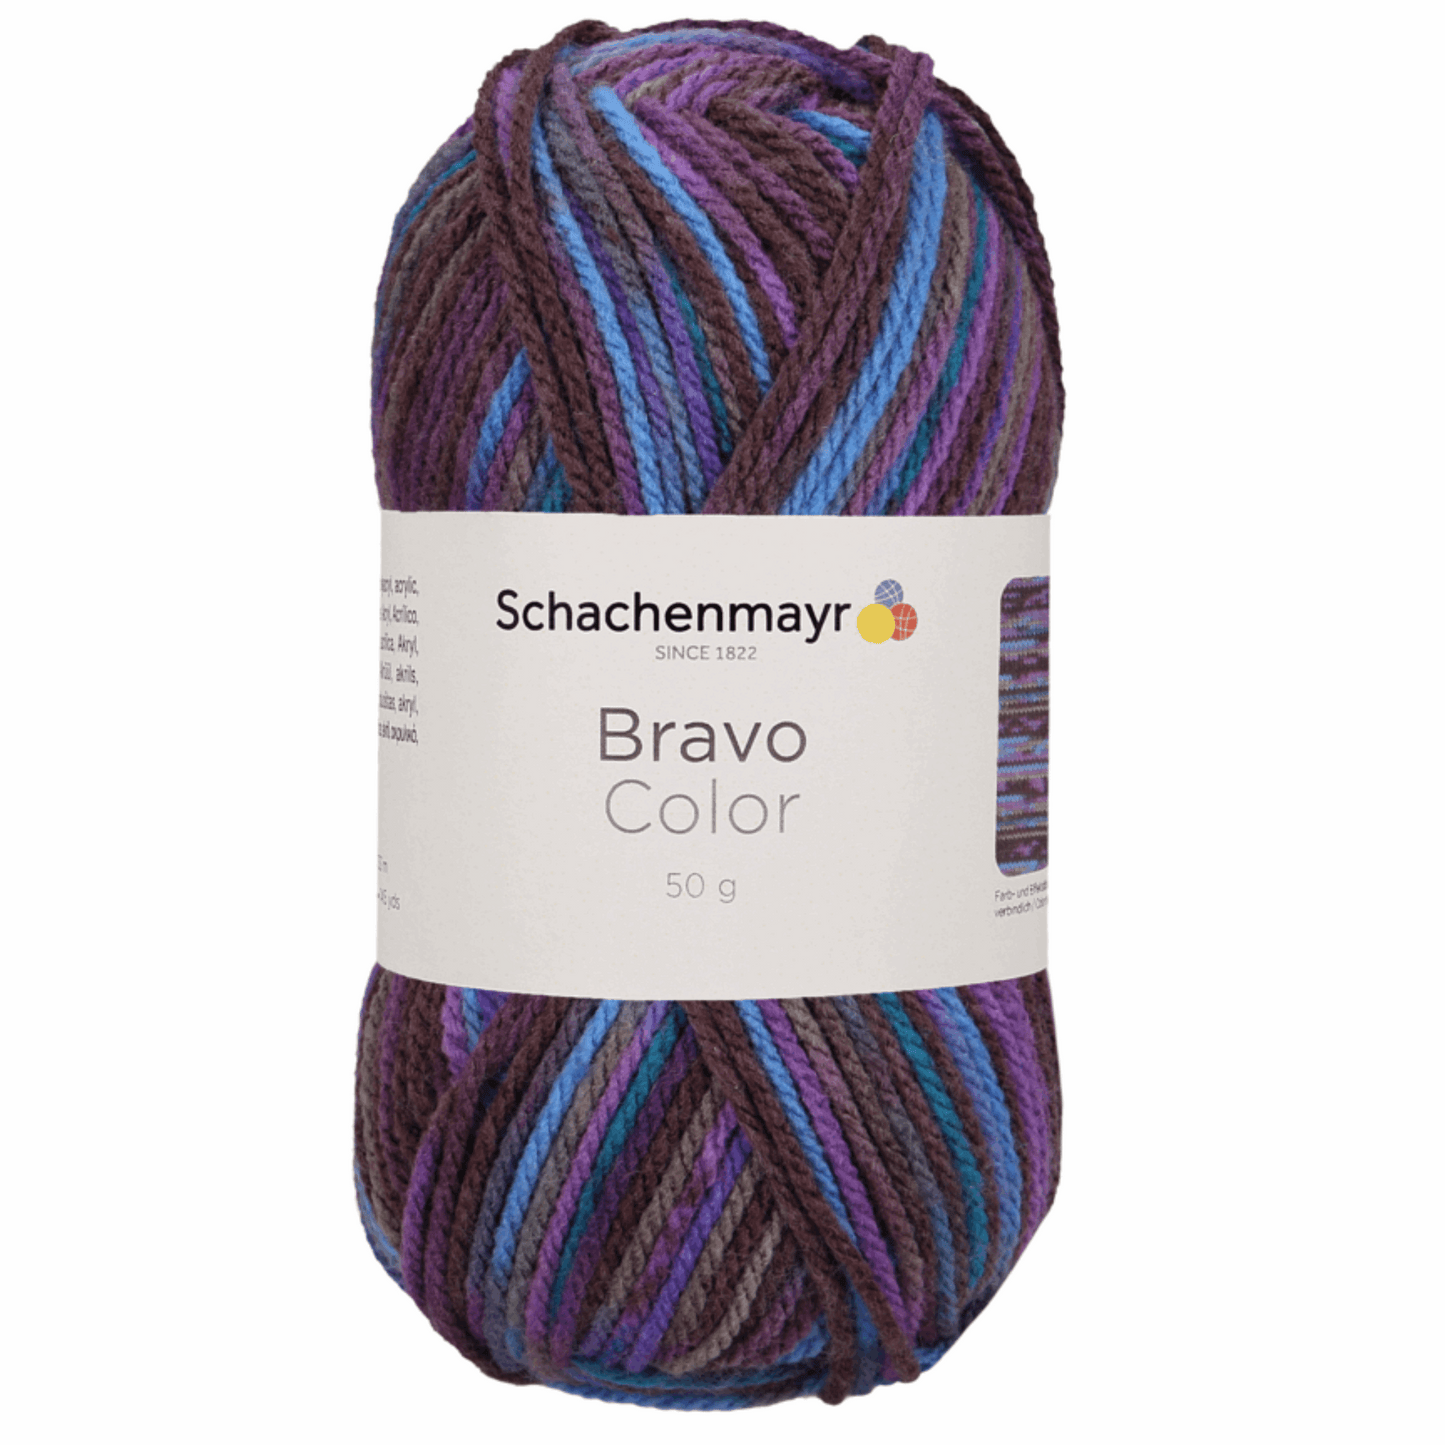 Schachenmayr Bravo Color 50g, 90421, Farbe Violett Color 2086